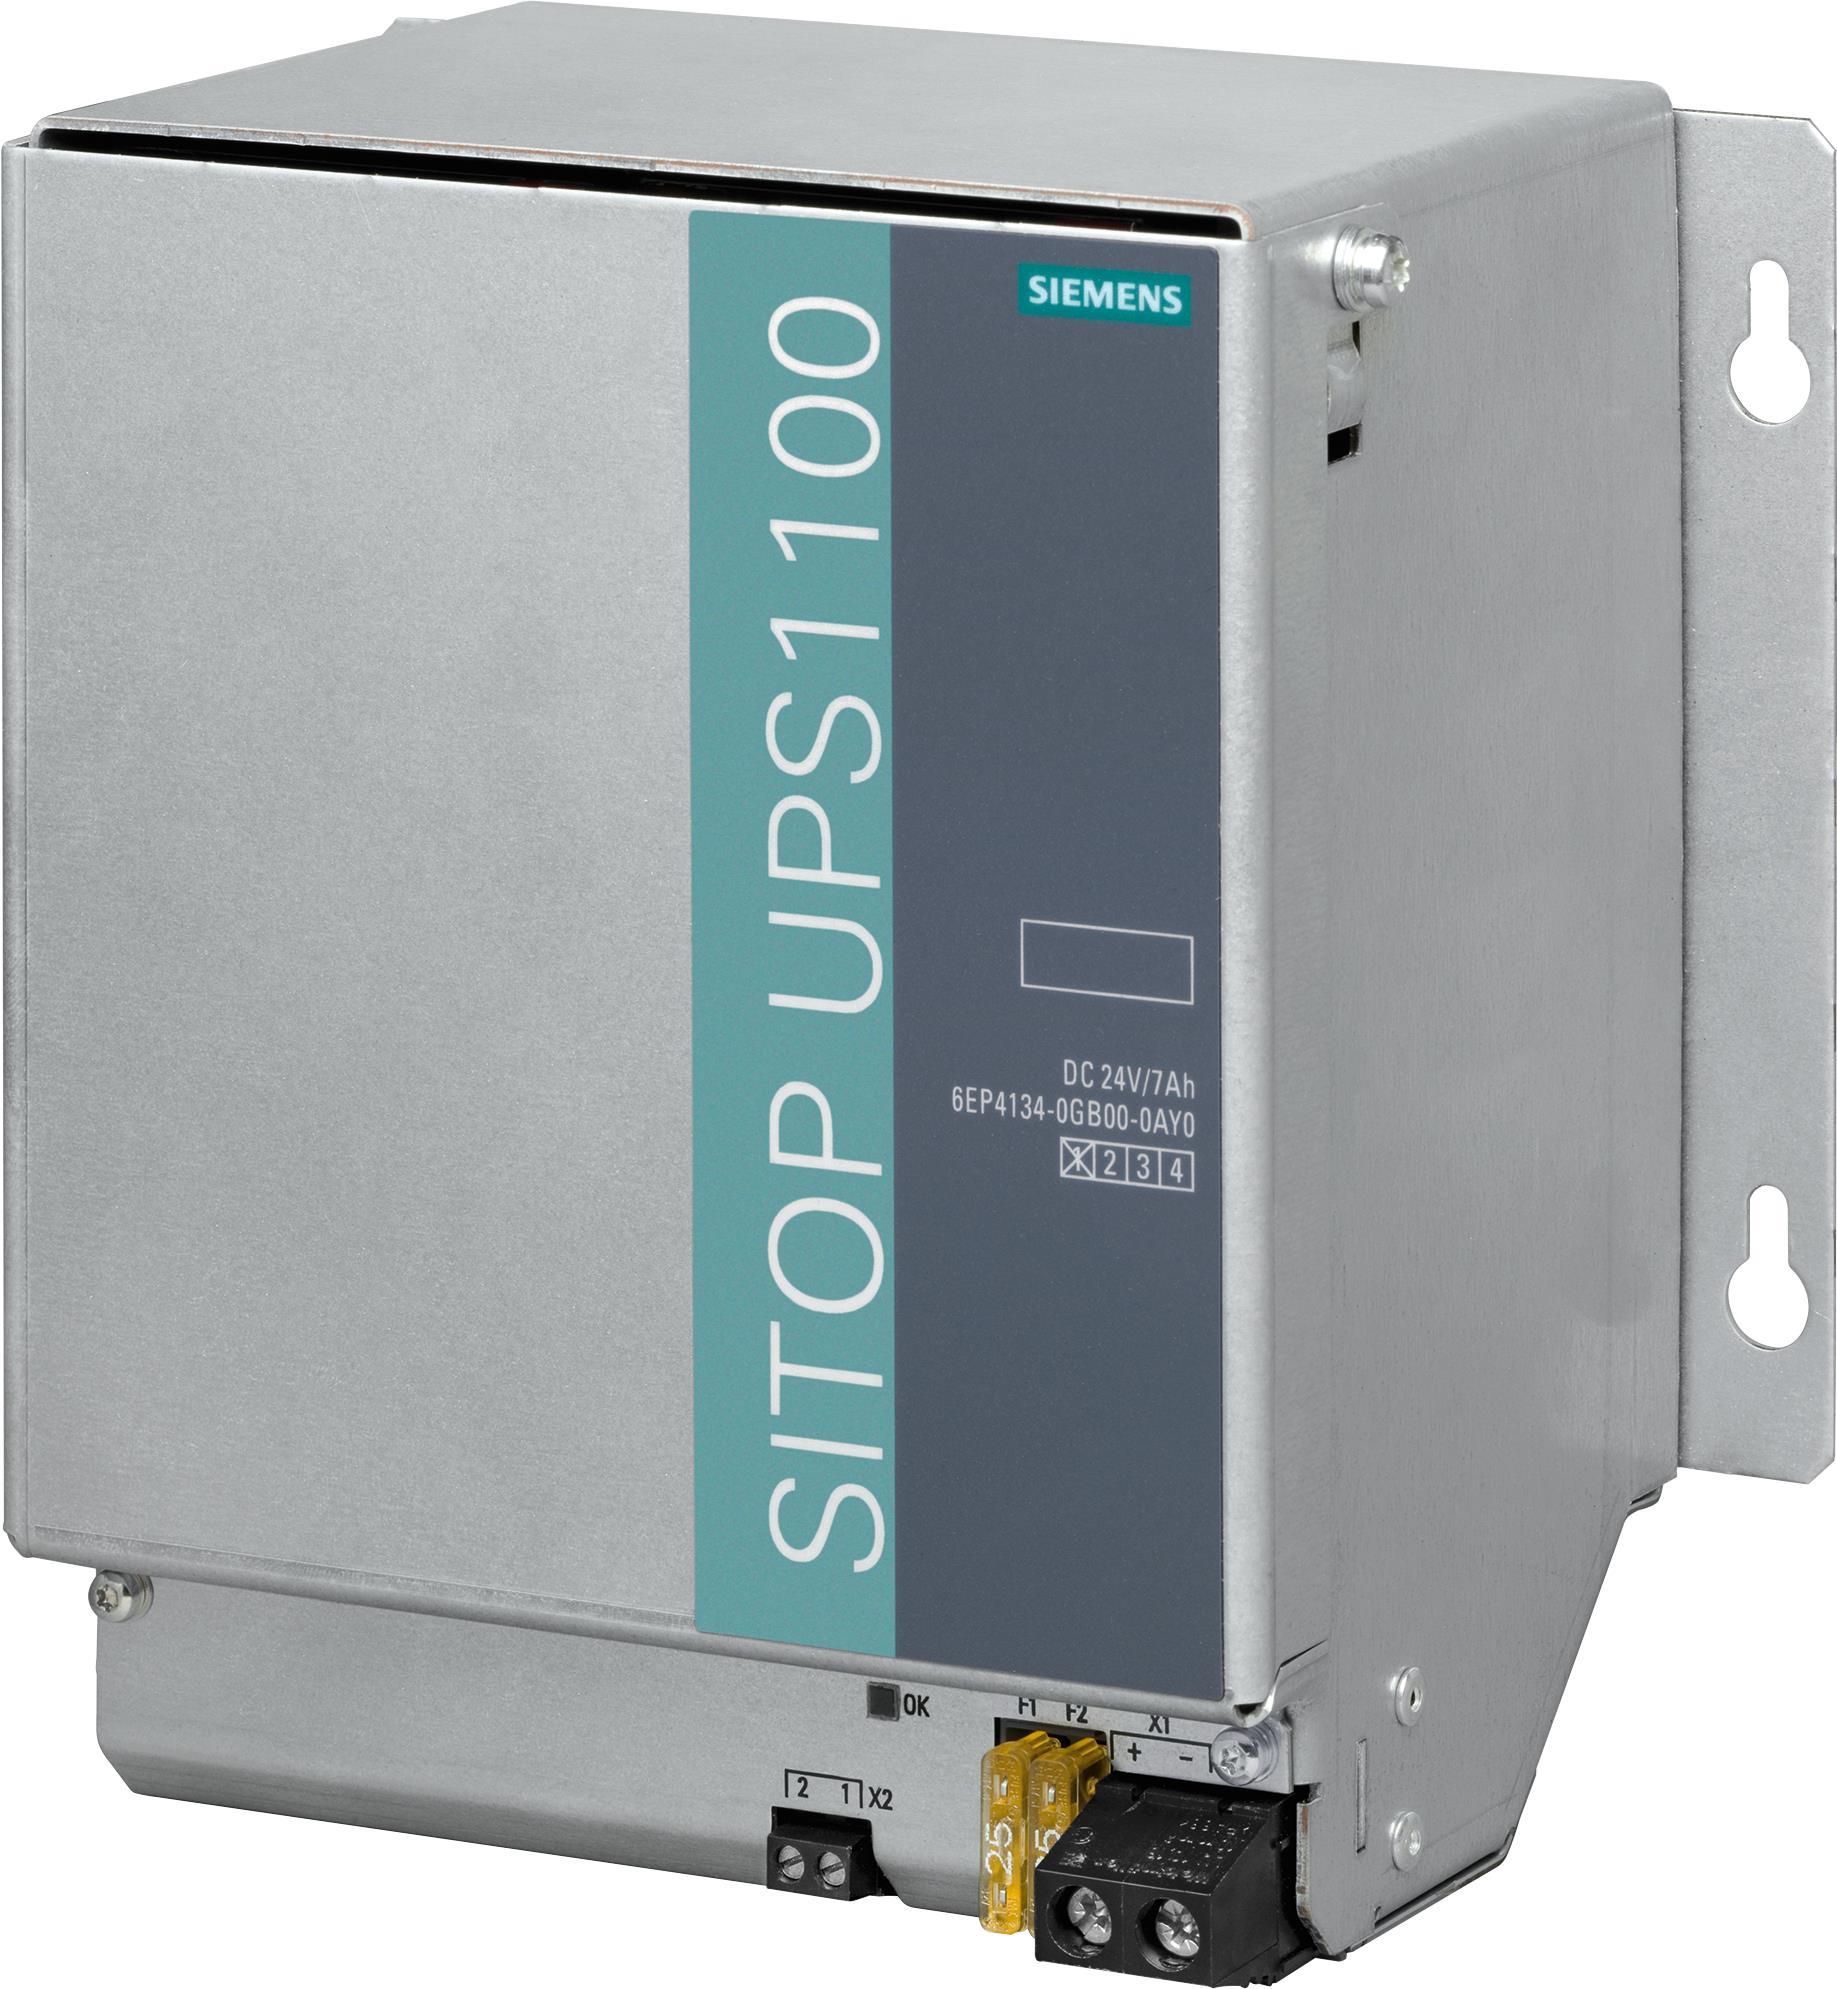 Siemens 6EP4134-0GB00-0AY0 Unterbrechungsfreie Stromversorgung (USV) (6EP4134-0GB00-0AY0)